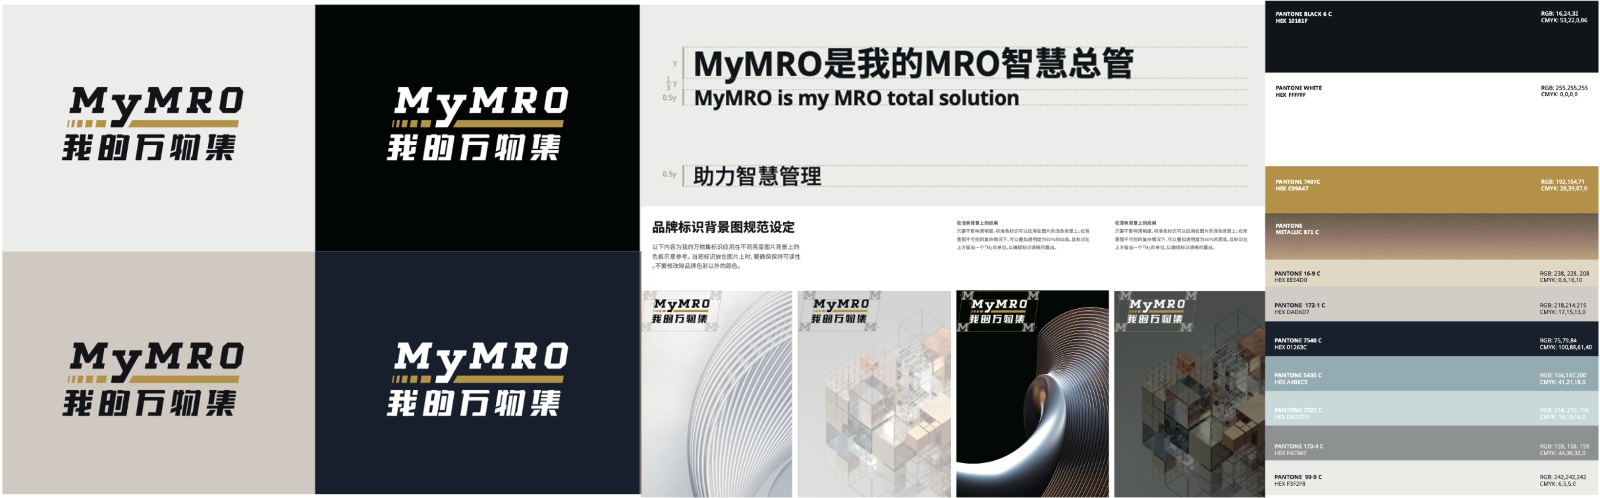 MyMRO's Brand Migration Strategy